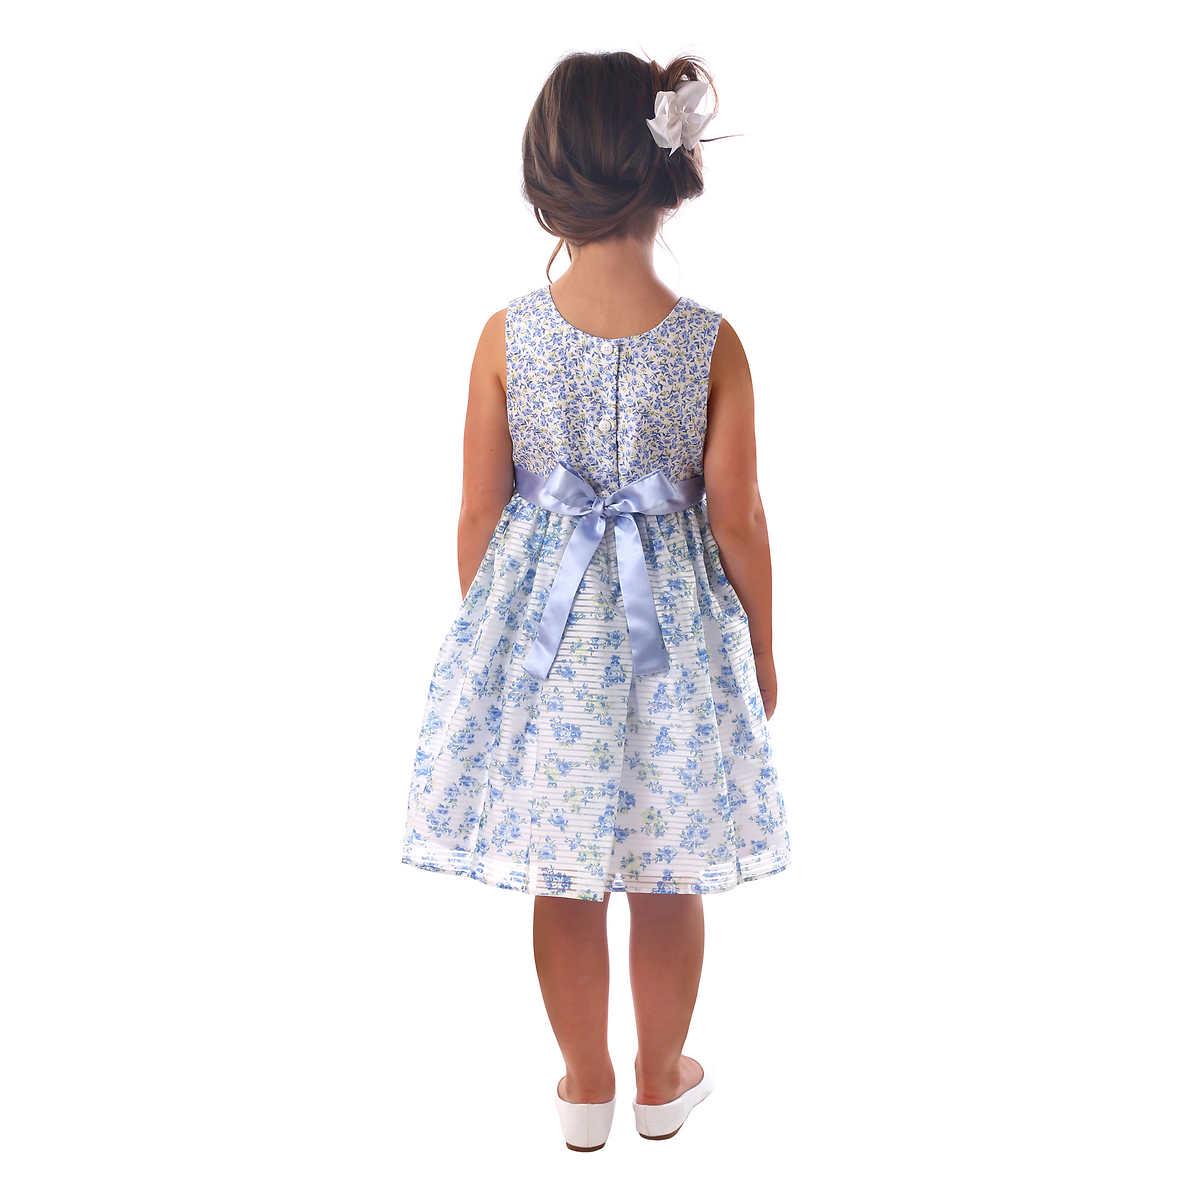 Jona Michelle Kids' Spring Dress